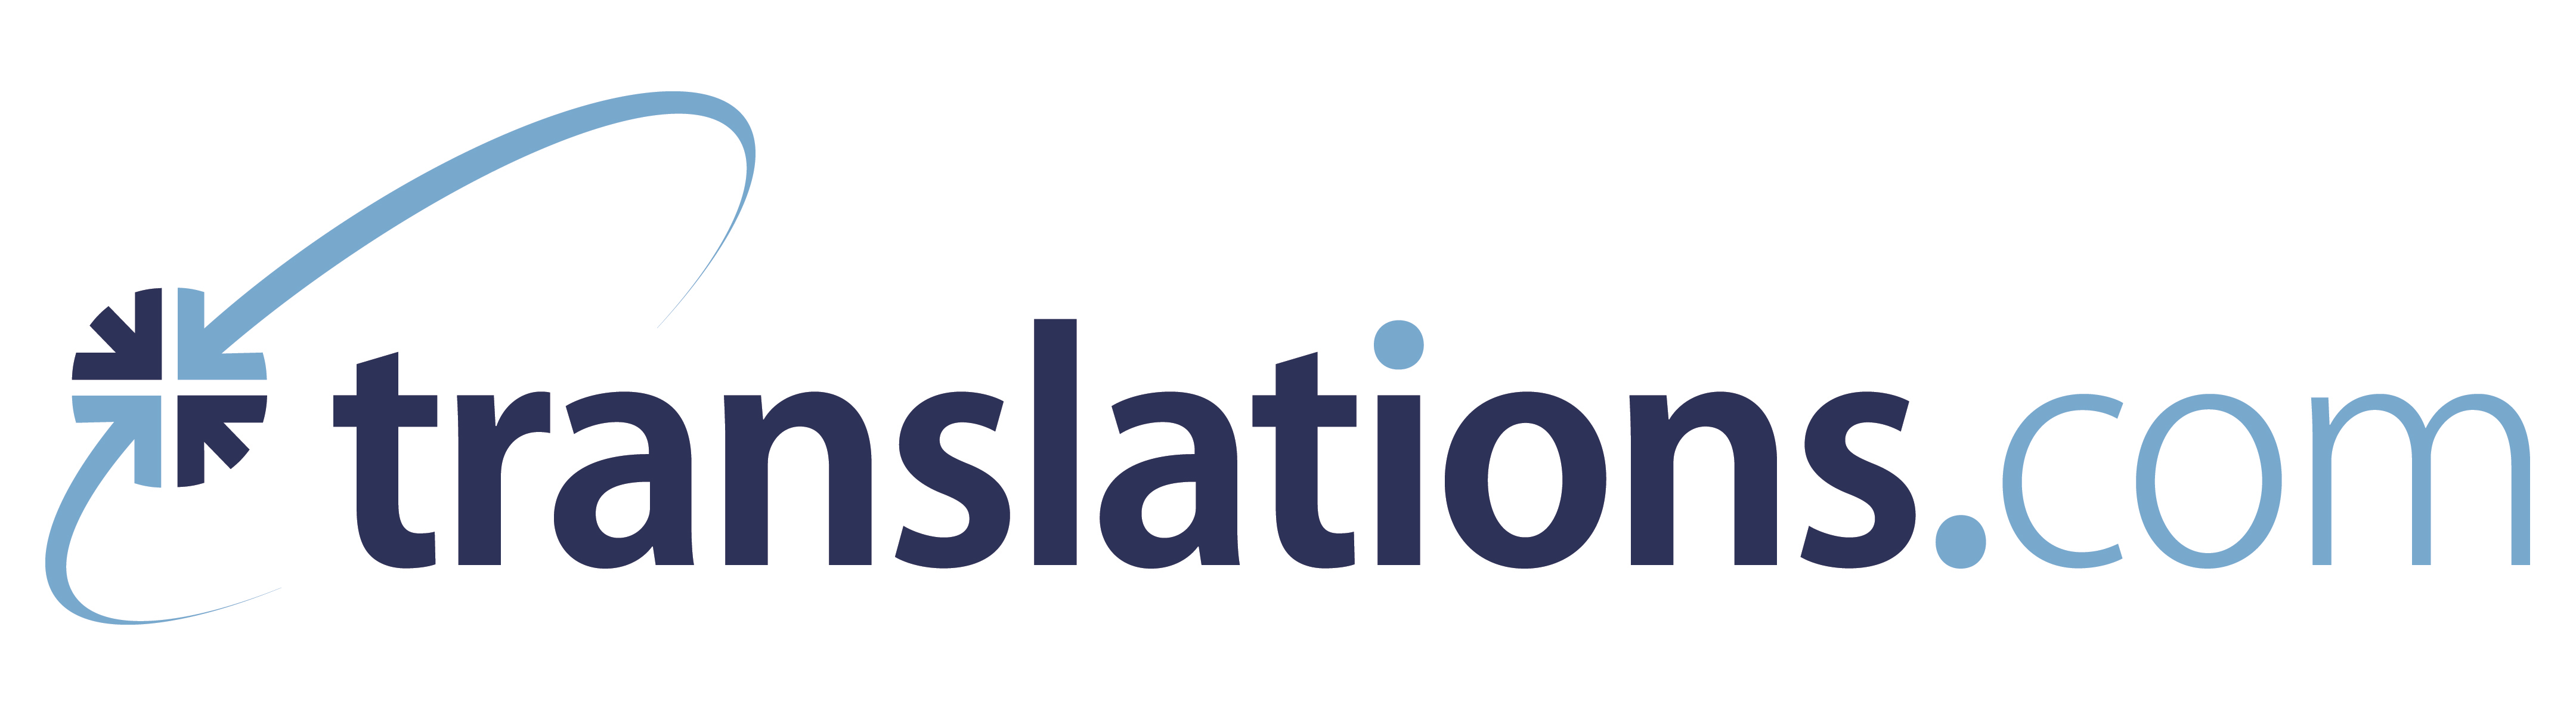 Translations.com Logo